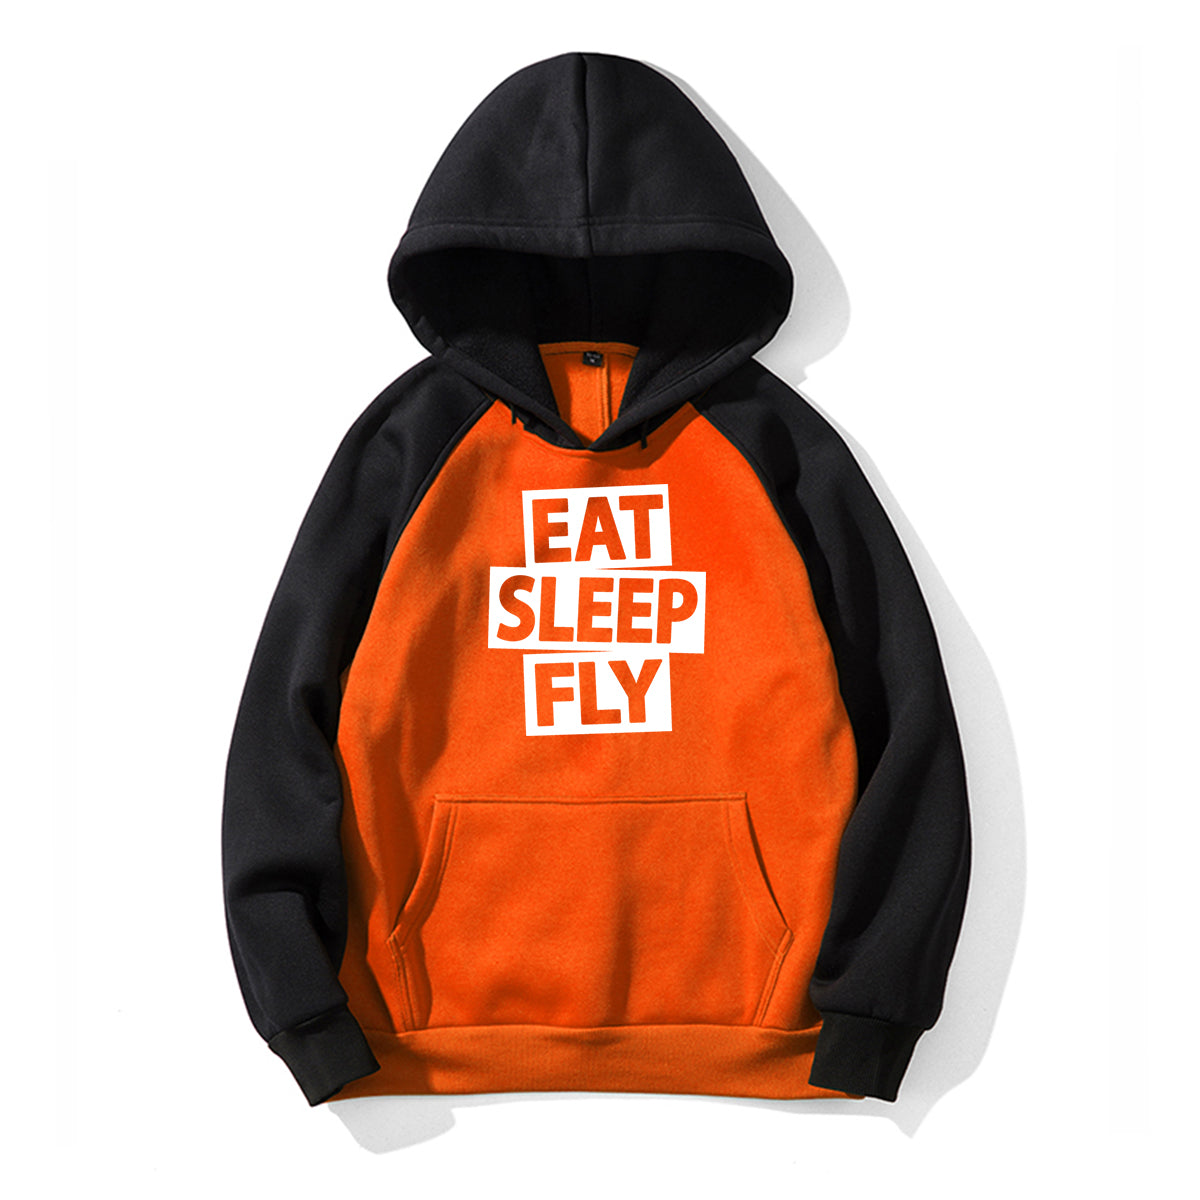 Eat Sleep Fly Designed Colourful Hoodies